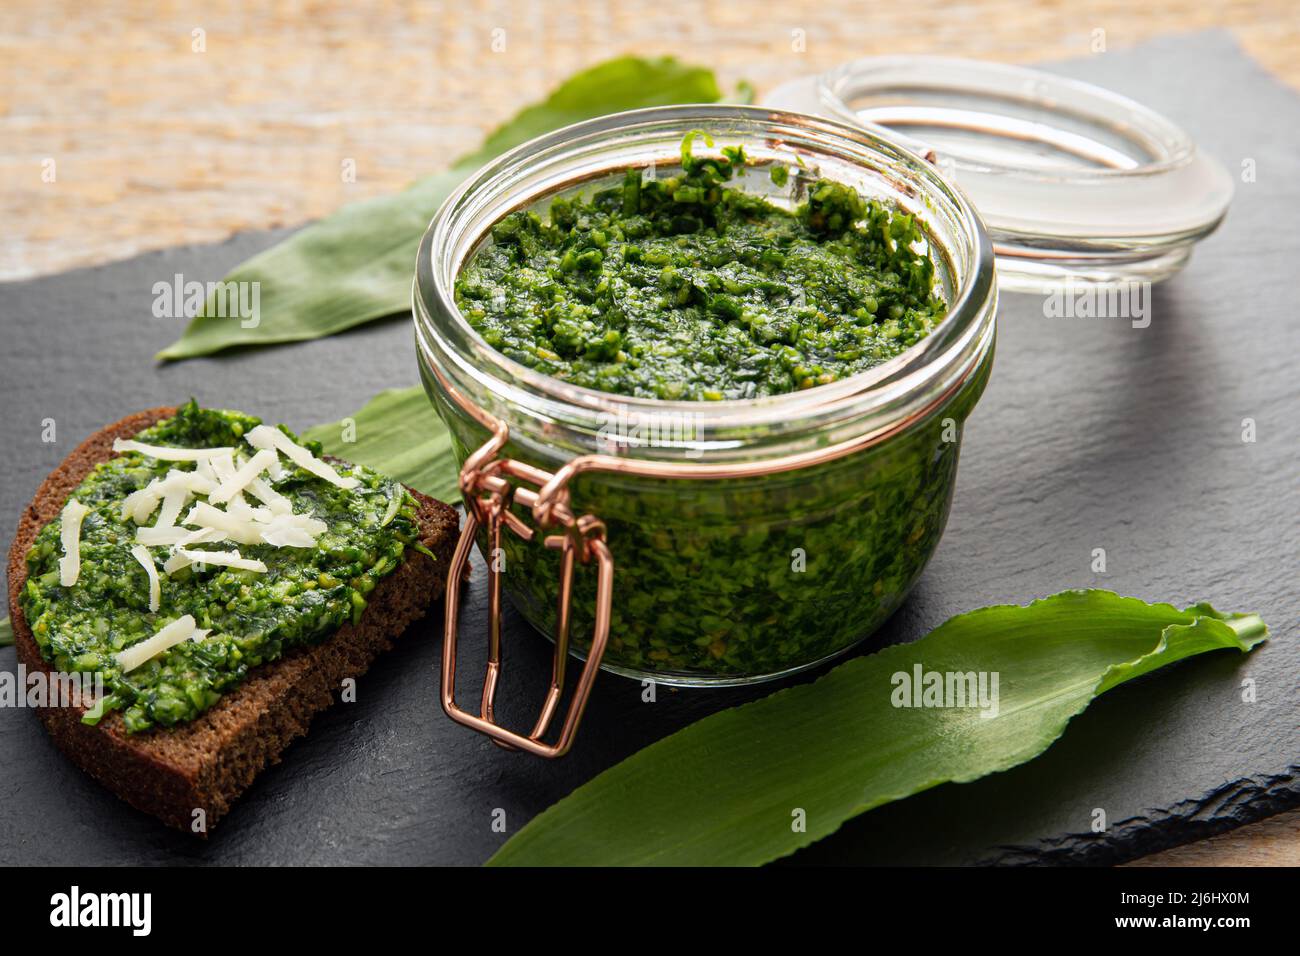 Homemade pesto sauce made with Allium ursinum leaves, known as wild garlic, ramsons, buckrams, broad-leaved garlic, wood garlic, bear leek. Stock Photo